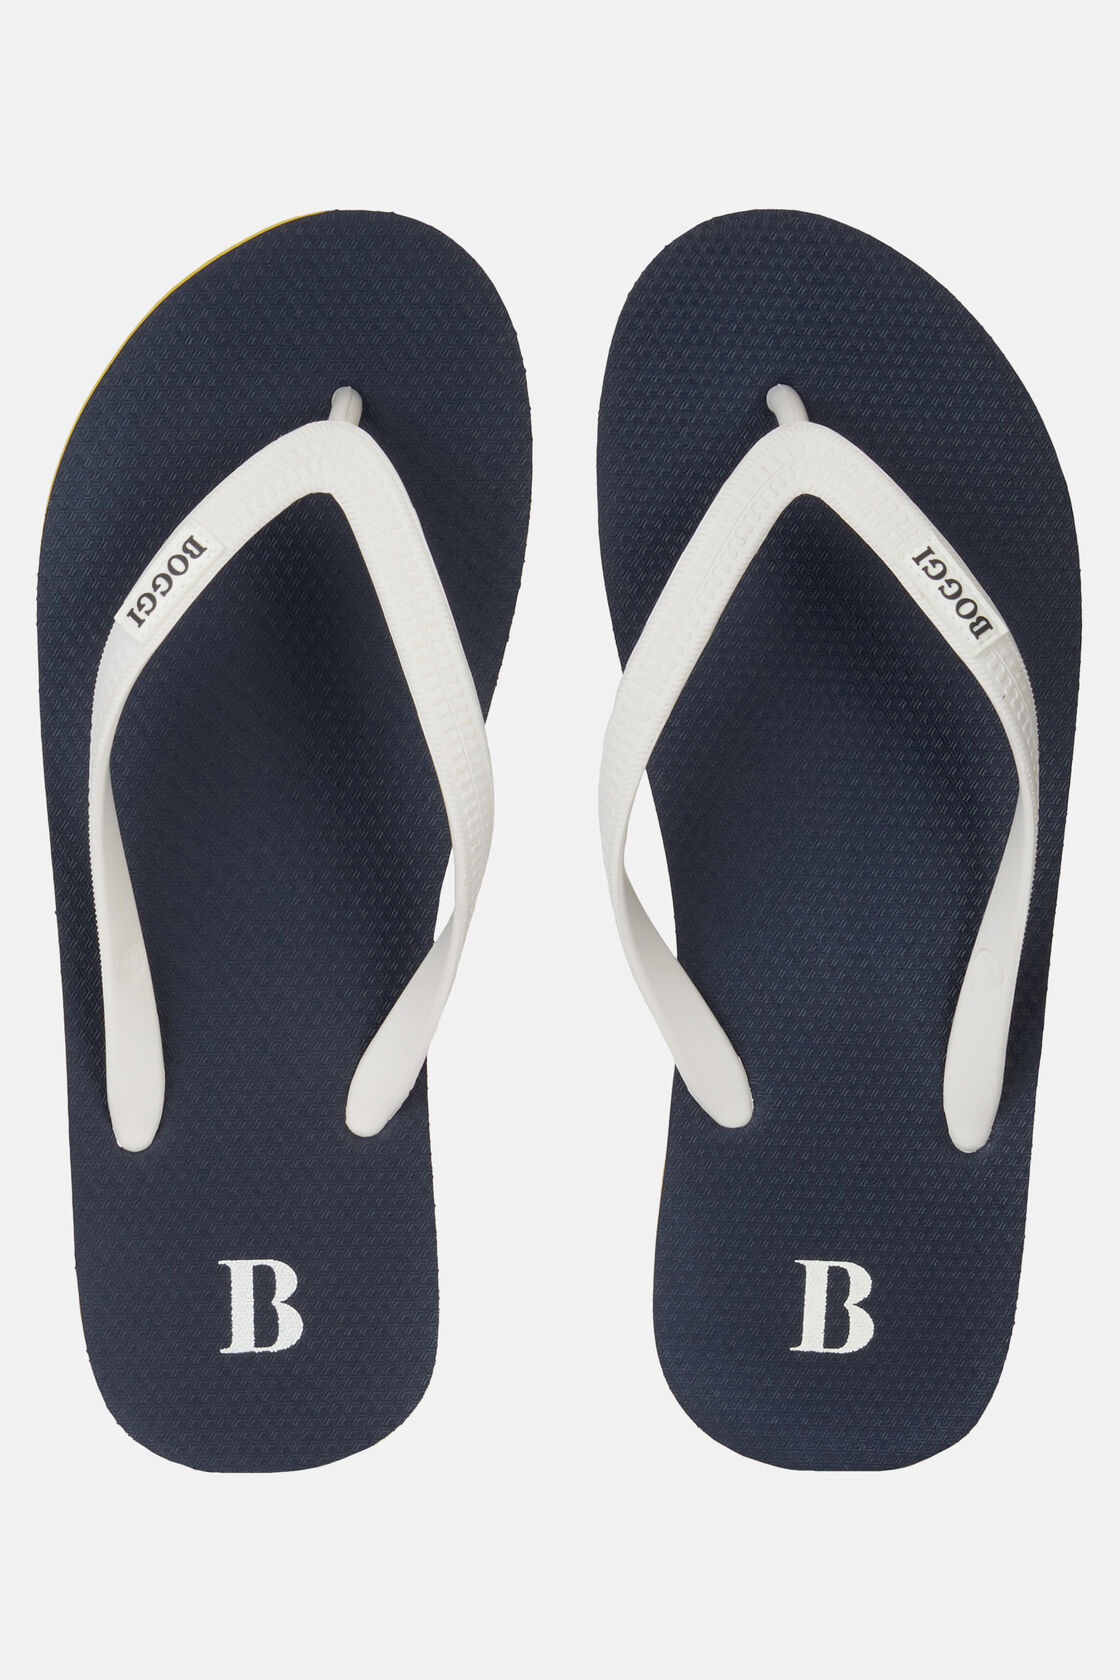 Marineblauwe rubberen slippers, Navy blue, hi-res